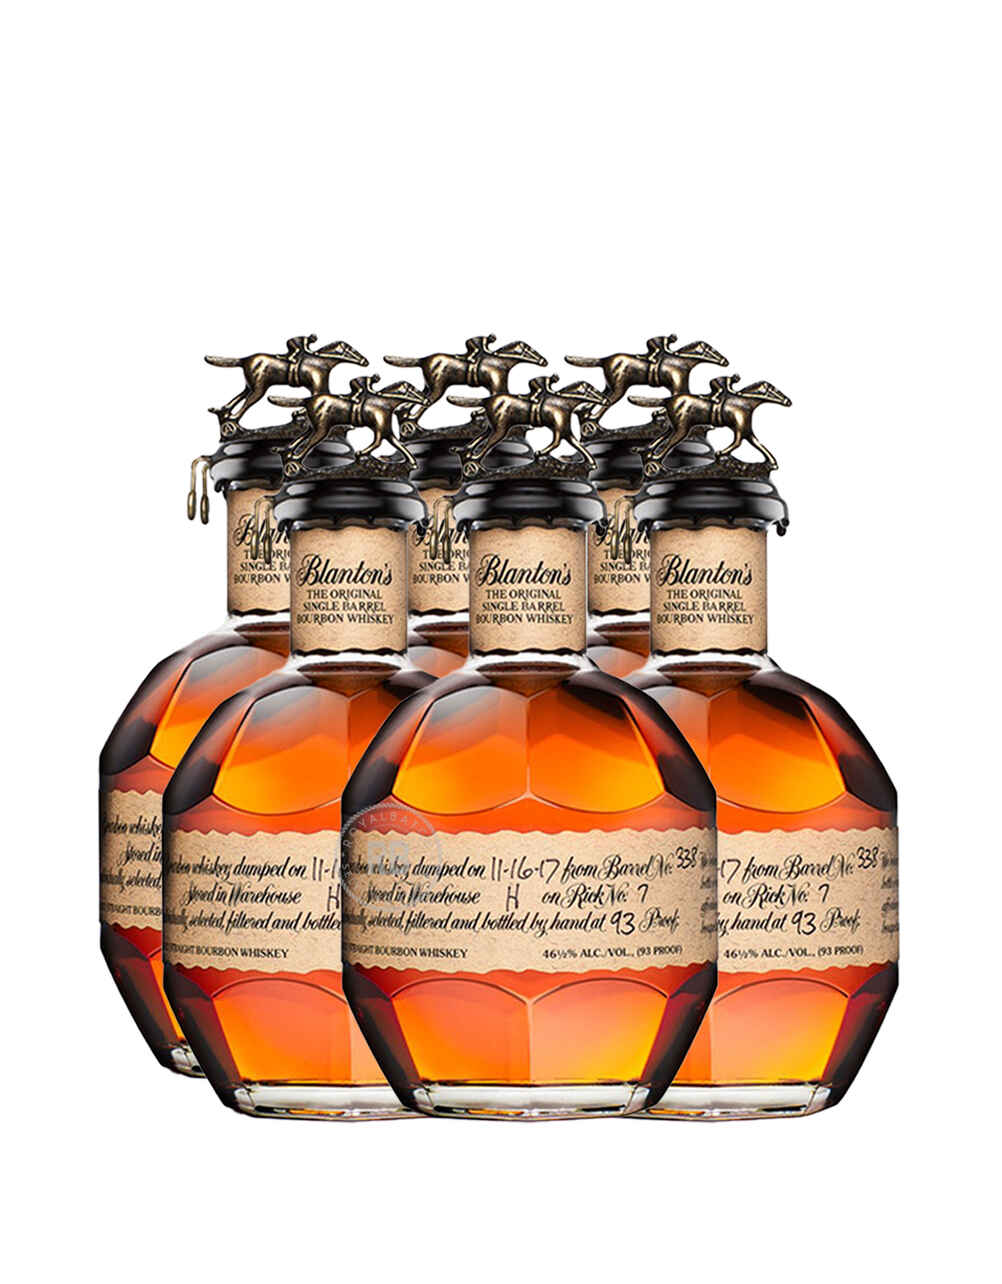 Blanton's Original Single Barrel Bourbon Whiskey (6 Pack) Bundle #008